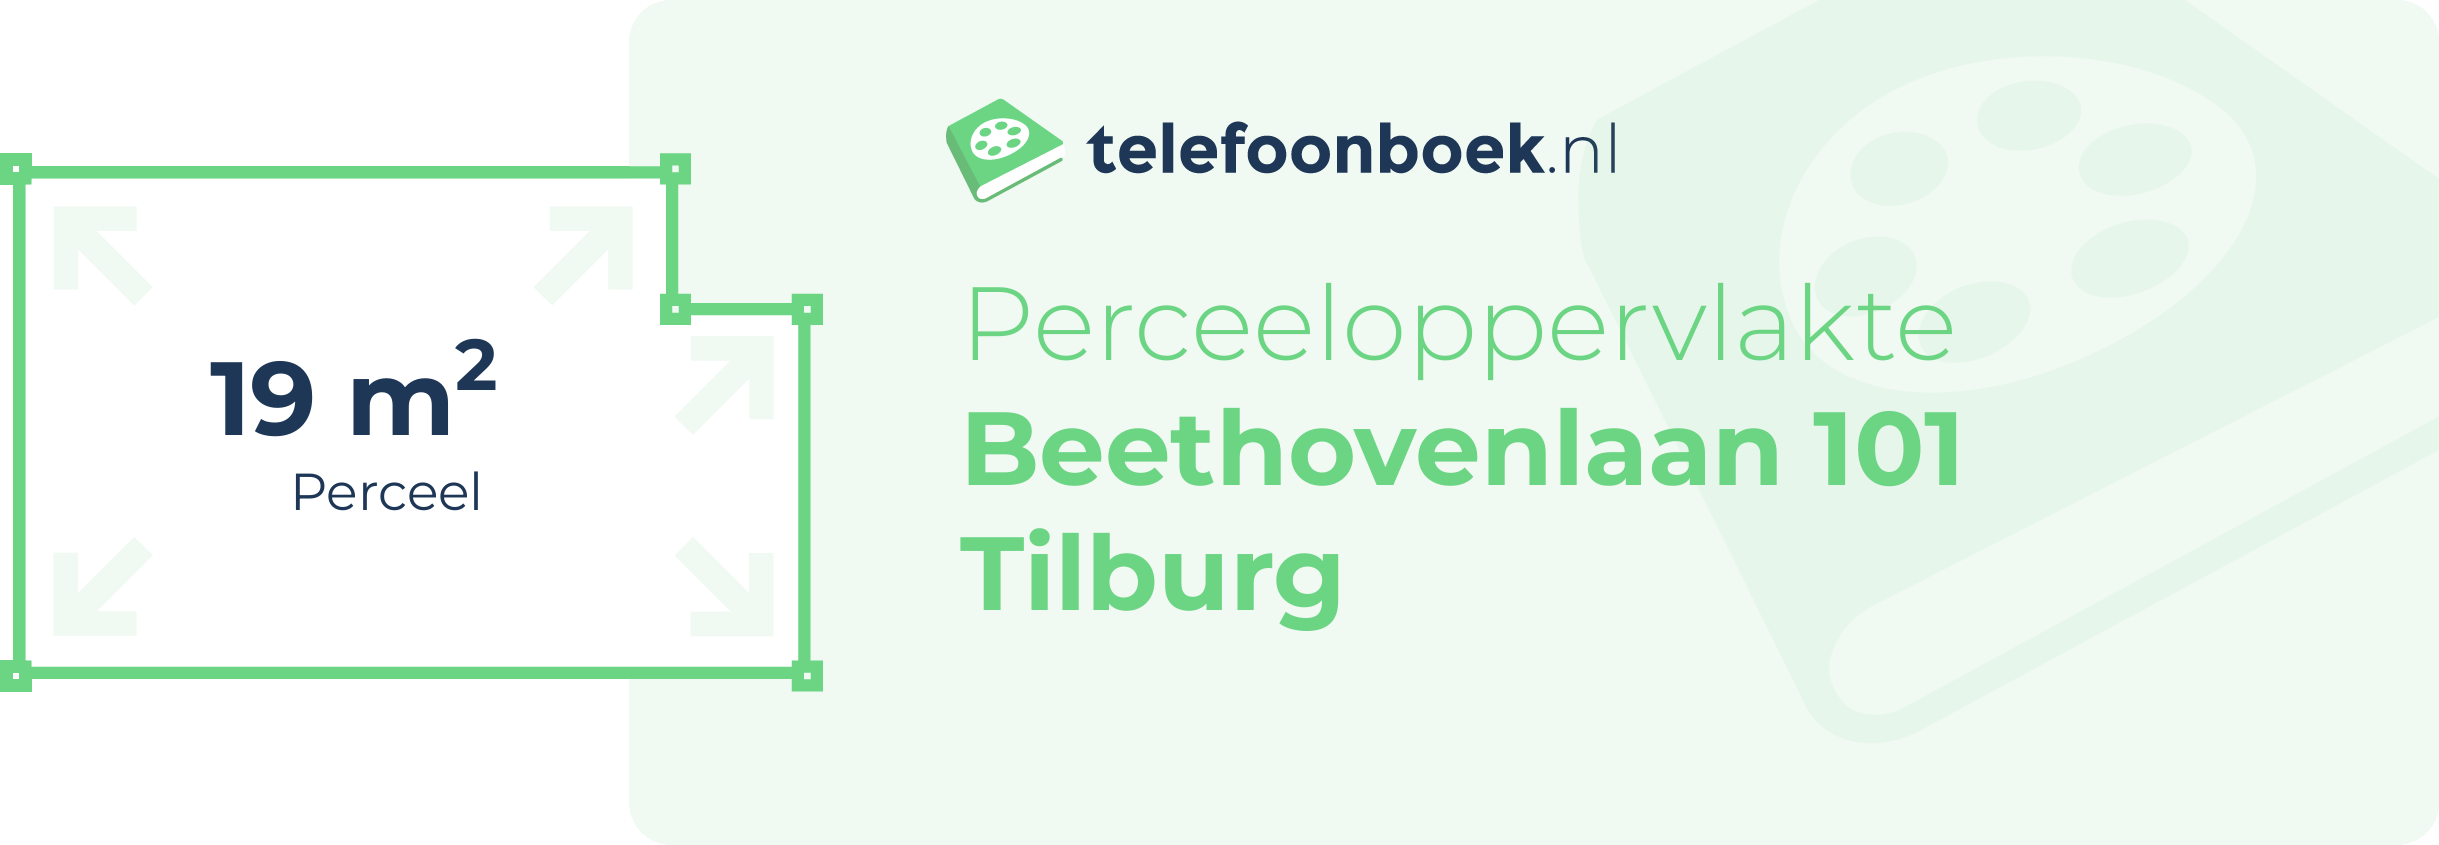 Perceeloppervlakte Beethovenlaan 101 Tilburg